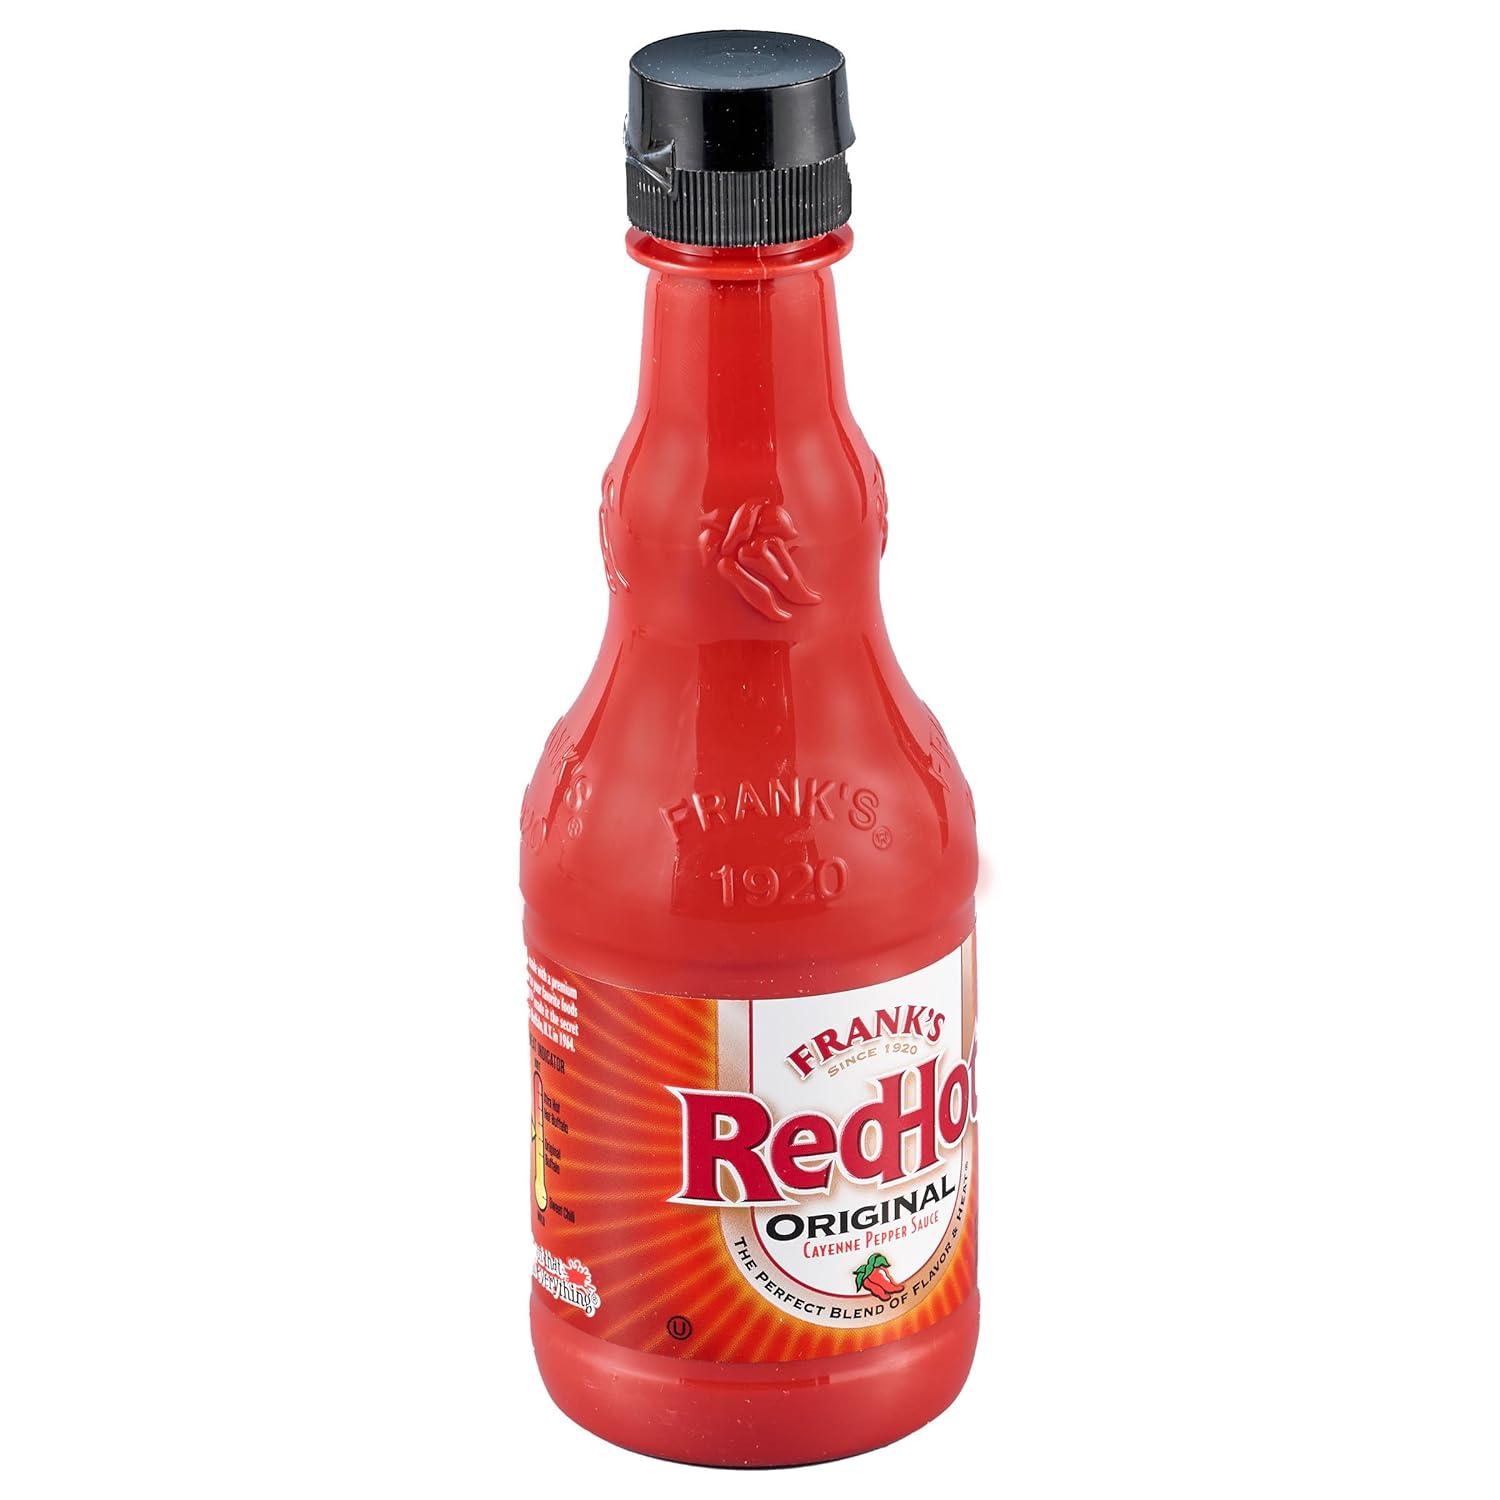 Franks RedHot Original Hot Sauce for $2.67